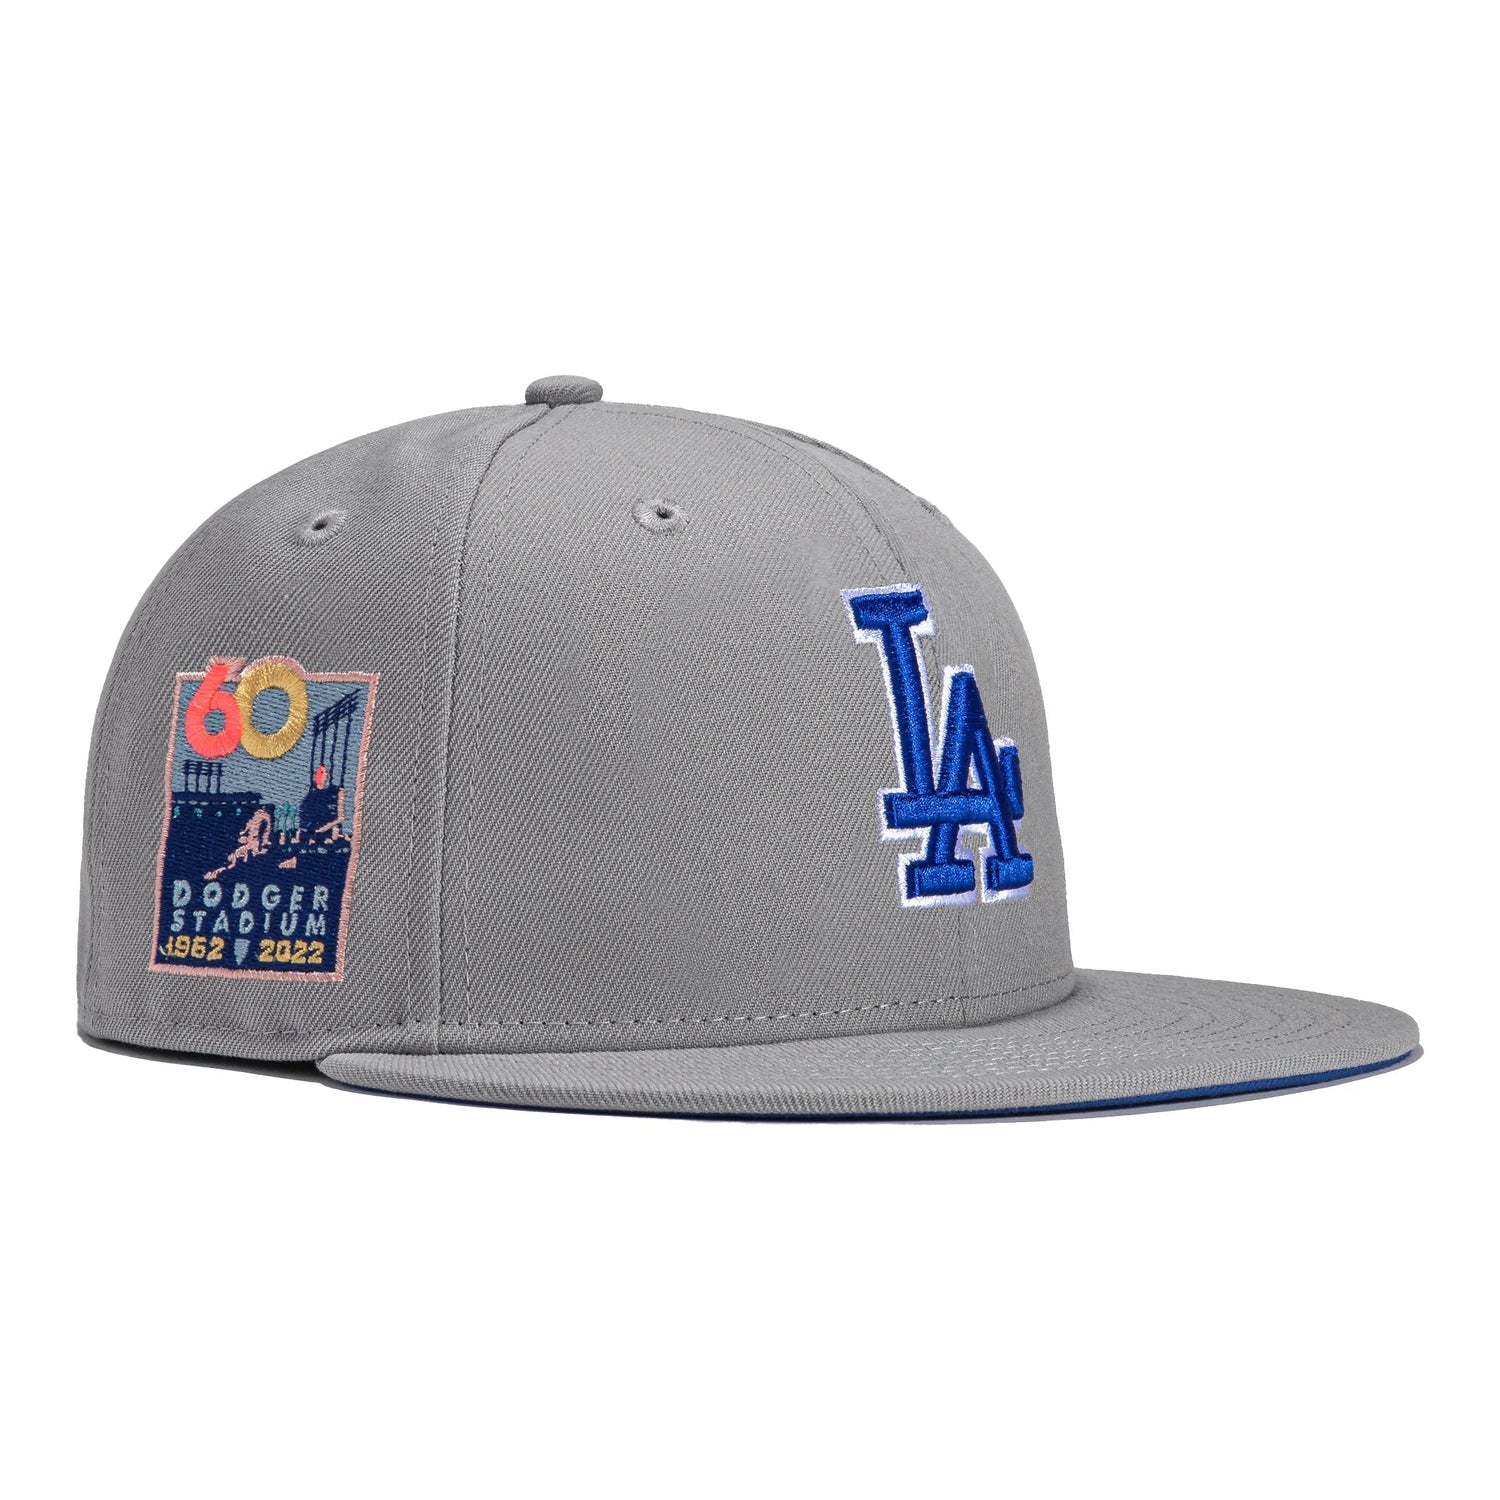 Men's New Era Royal Los Angeles Dodgers 60th Anniversary